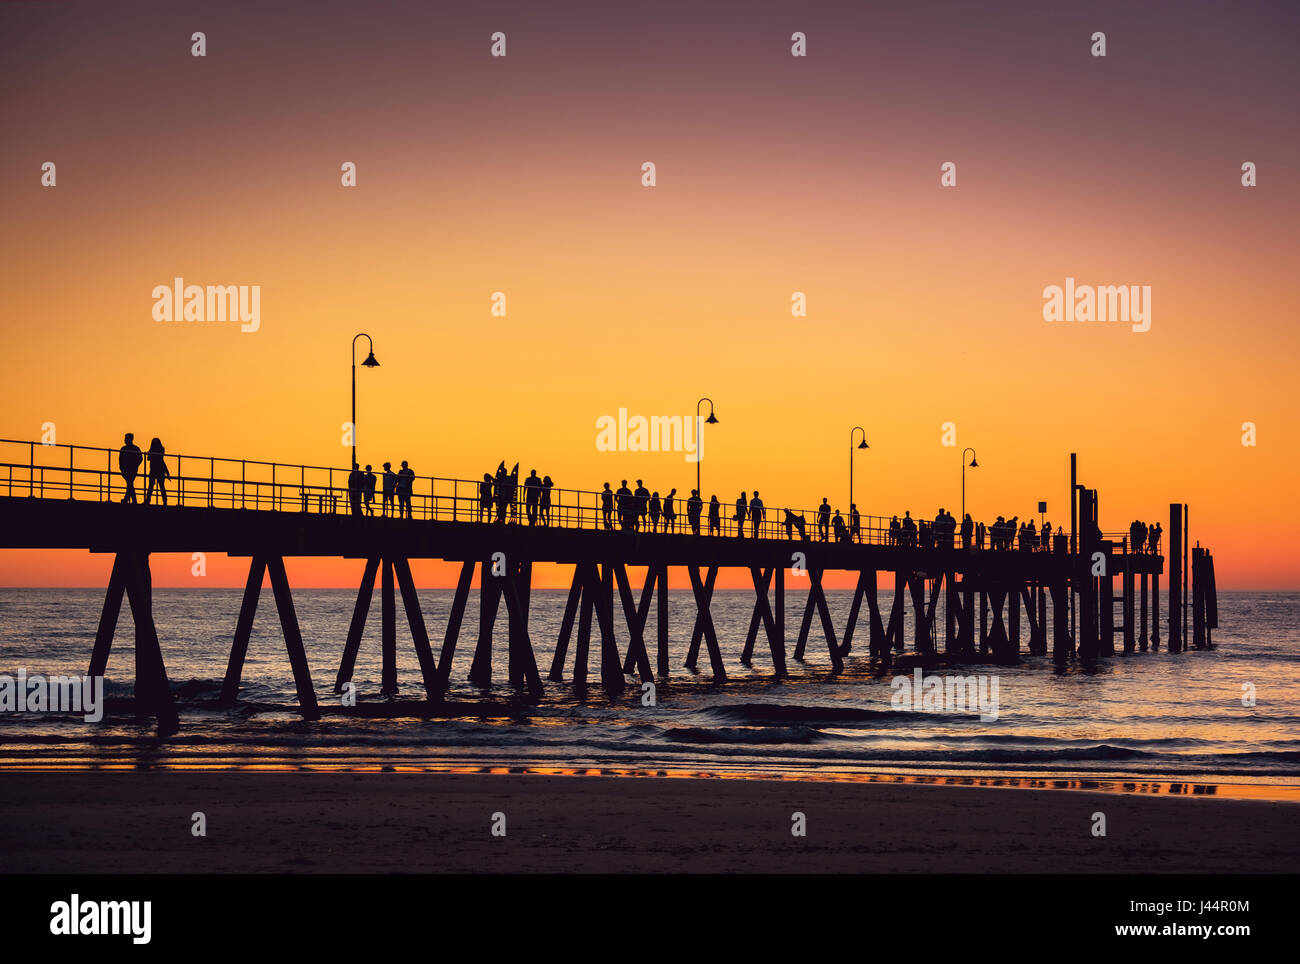 La playa de Glenelg jetty con gente al atardecer, Adelaide, Australia del Sur Foto de stock